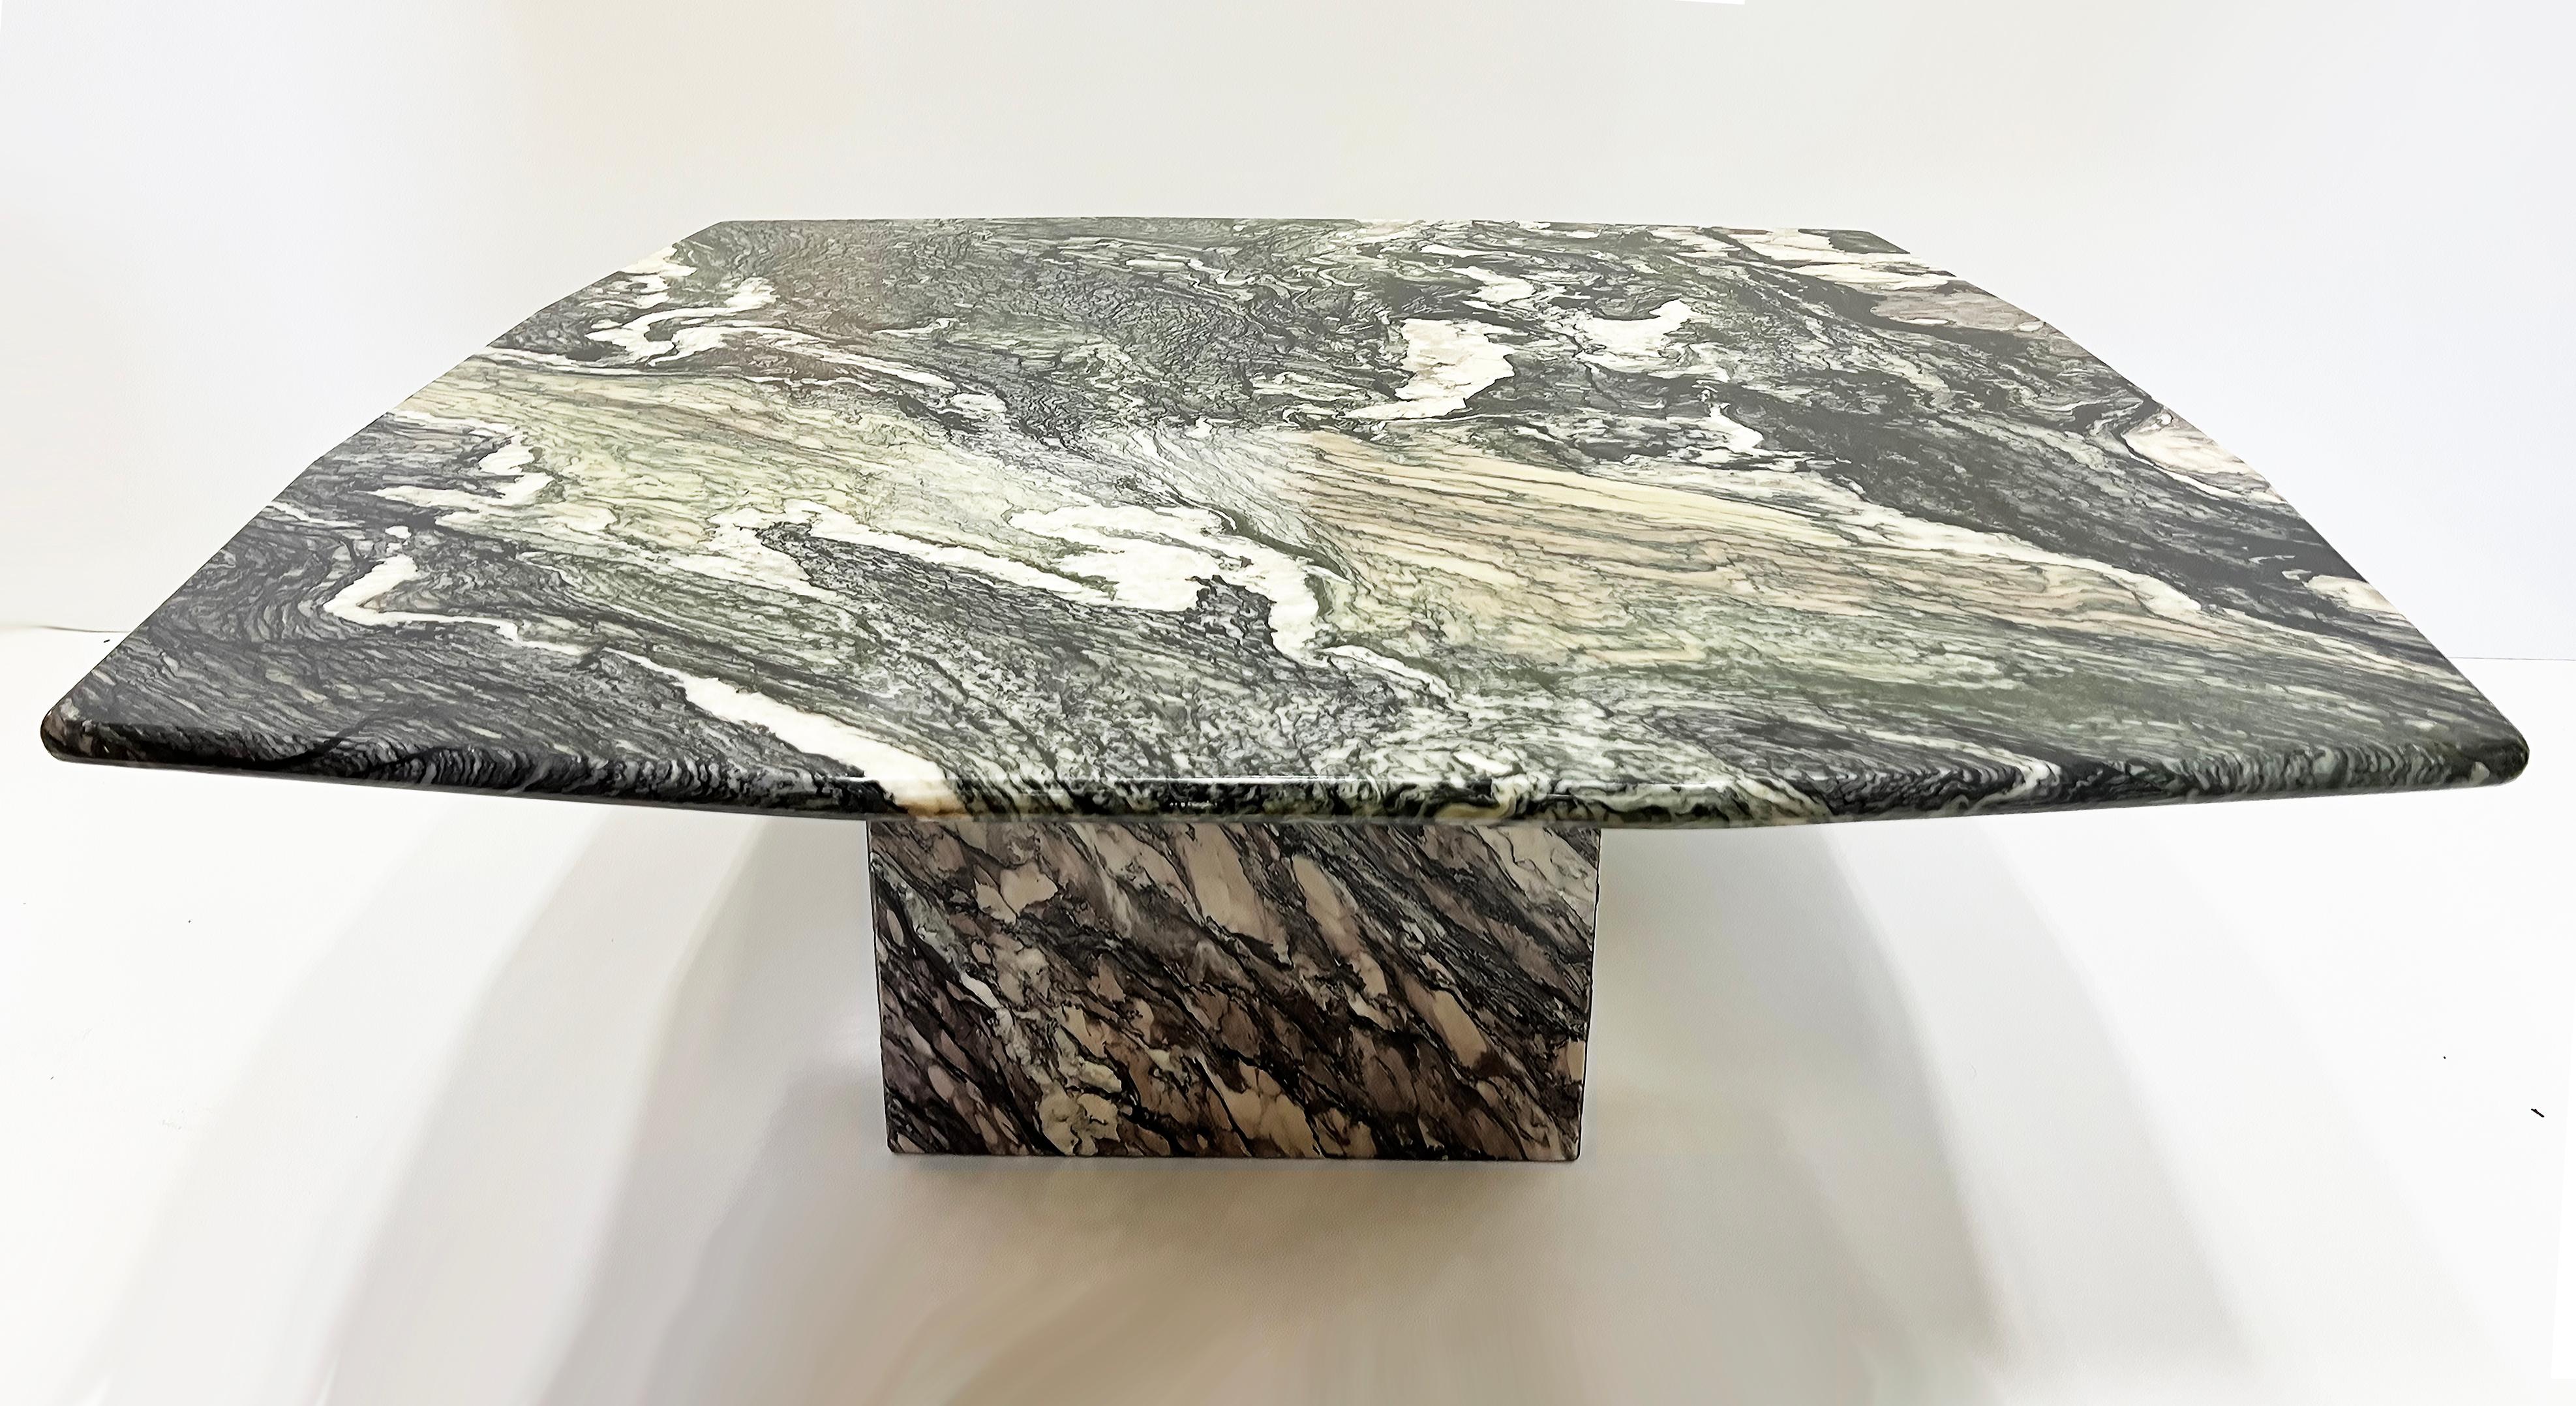 Table basse italienne post-moderne Cipollino Ondulato

Nous proposons à la vente une superbe table basse italienne post-moderne créée avec le marbre exotique Cipollino Ondulato. Le plateau de forme inhabituelle a des bords plats qui s'incurvent